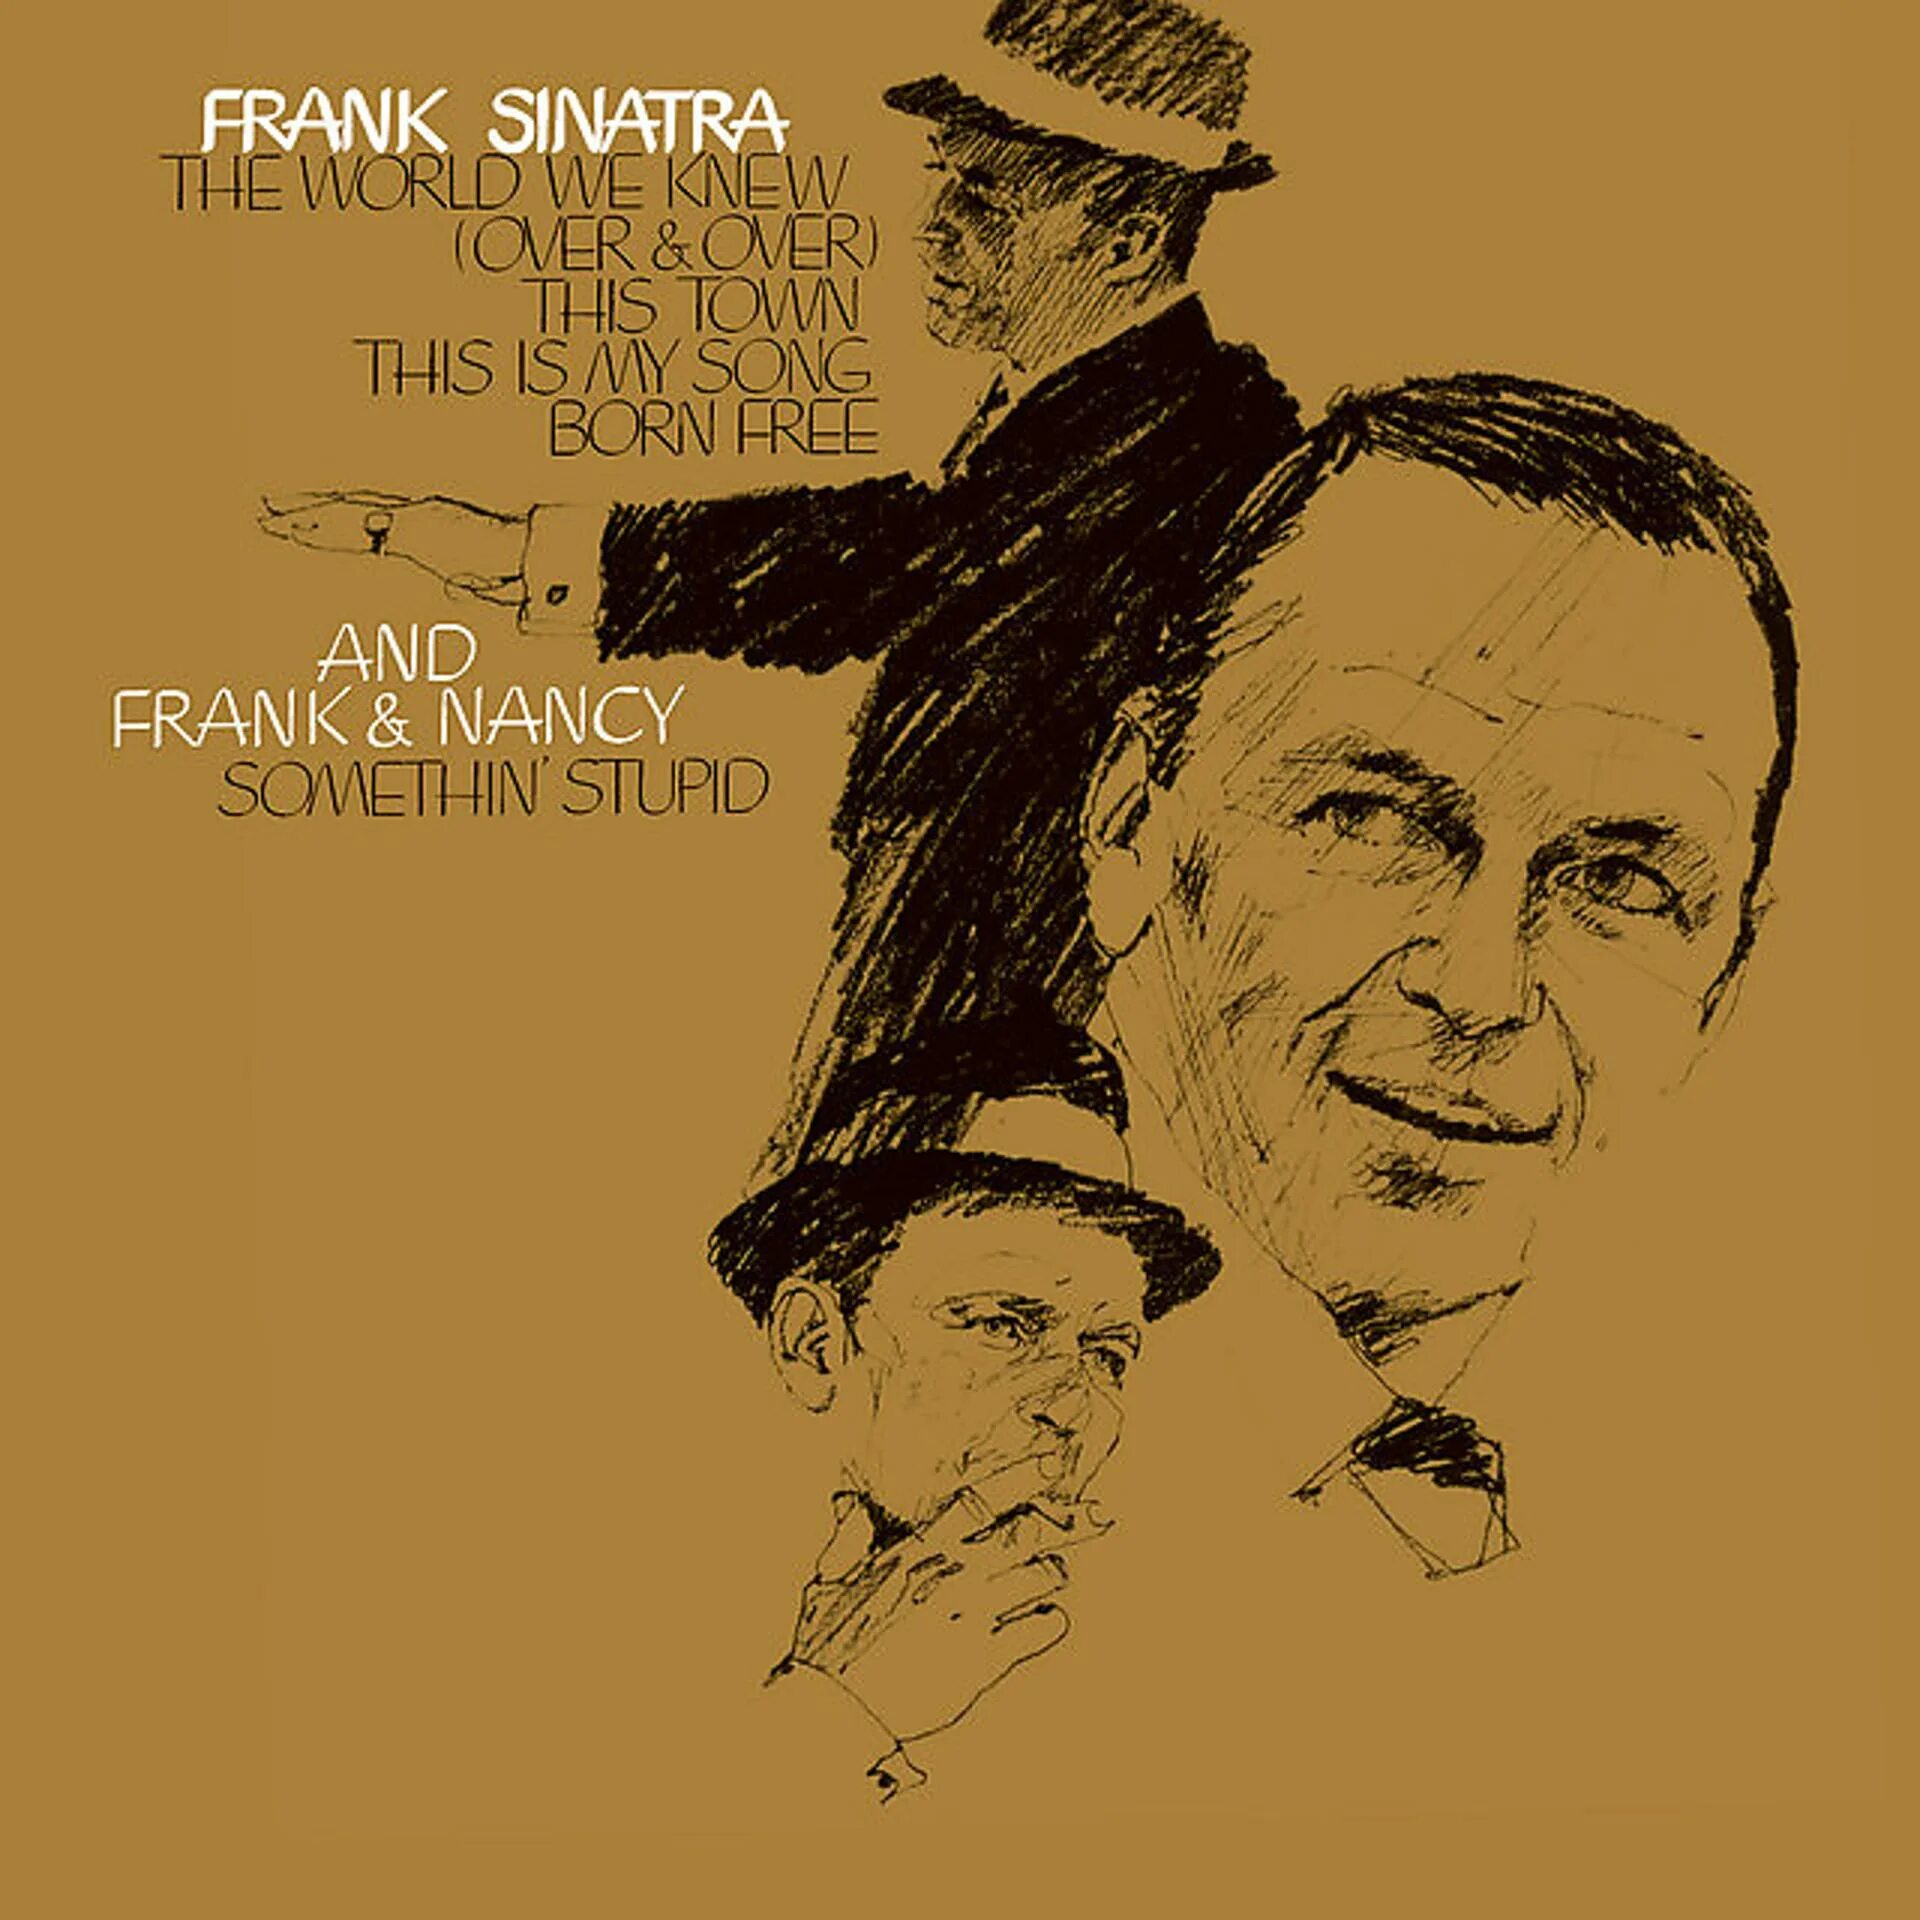 The World we knew Фрэнк Синатра. Фрэнк Синатра пластинка World we knew. The World we knew Frank Sinatra обложка. Frank Sinatra – Frankie (LP).